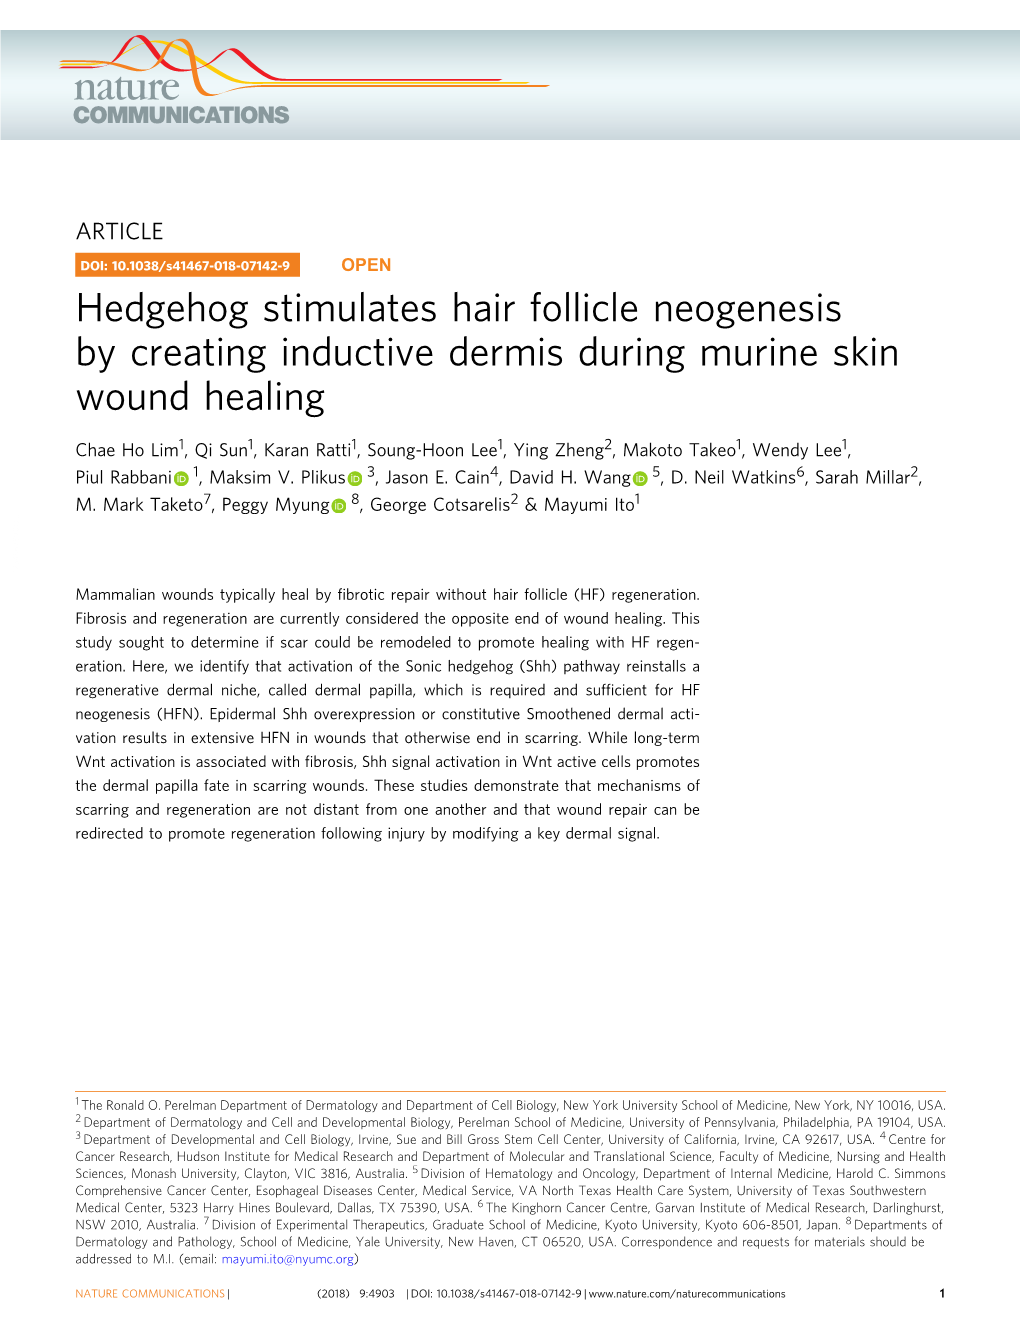 Hedgehog Stimulates Hair Follicle Neogenesis by Creating Inductive Dermis During Murine Skin Wound Healing